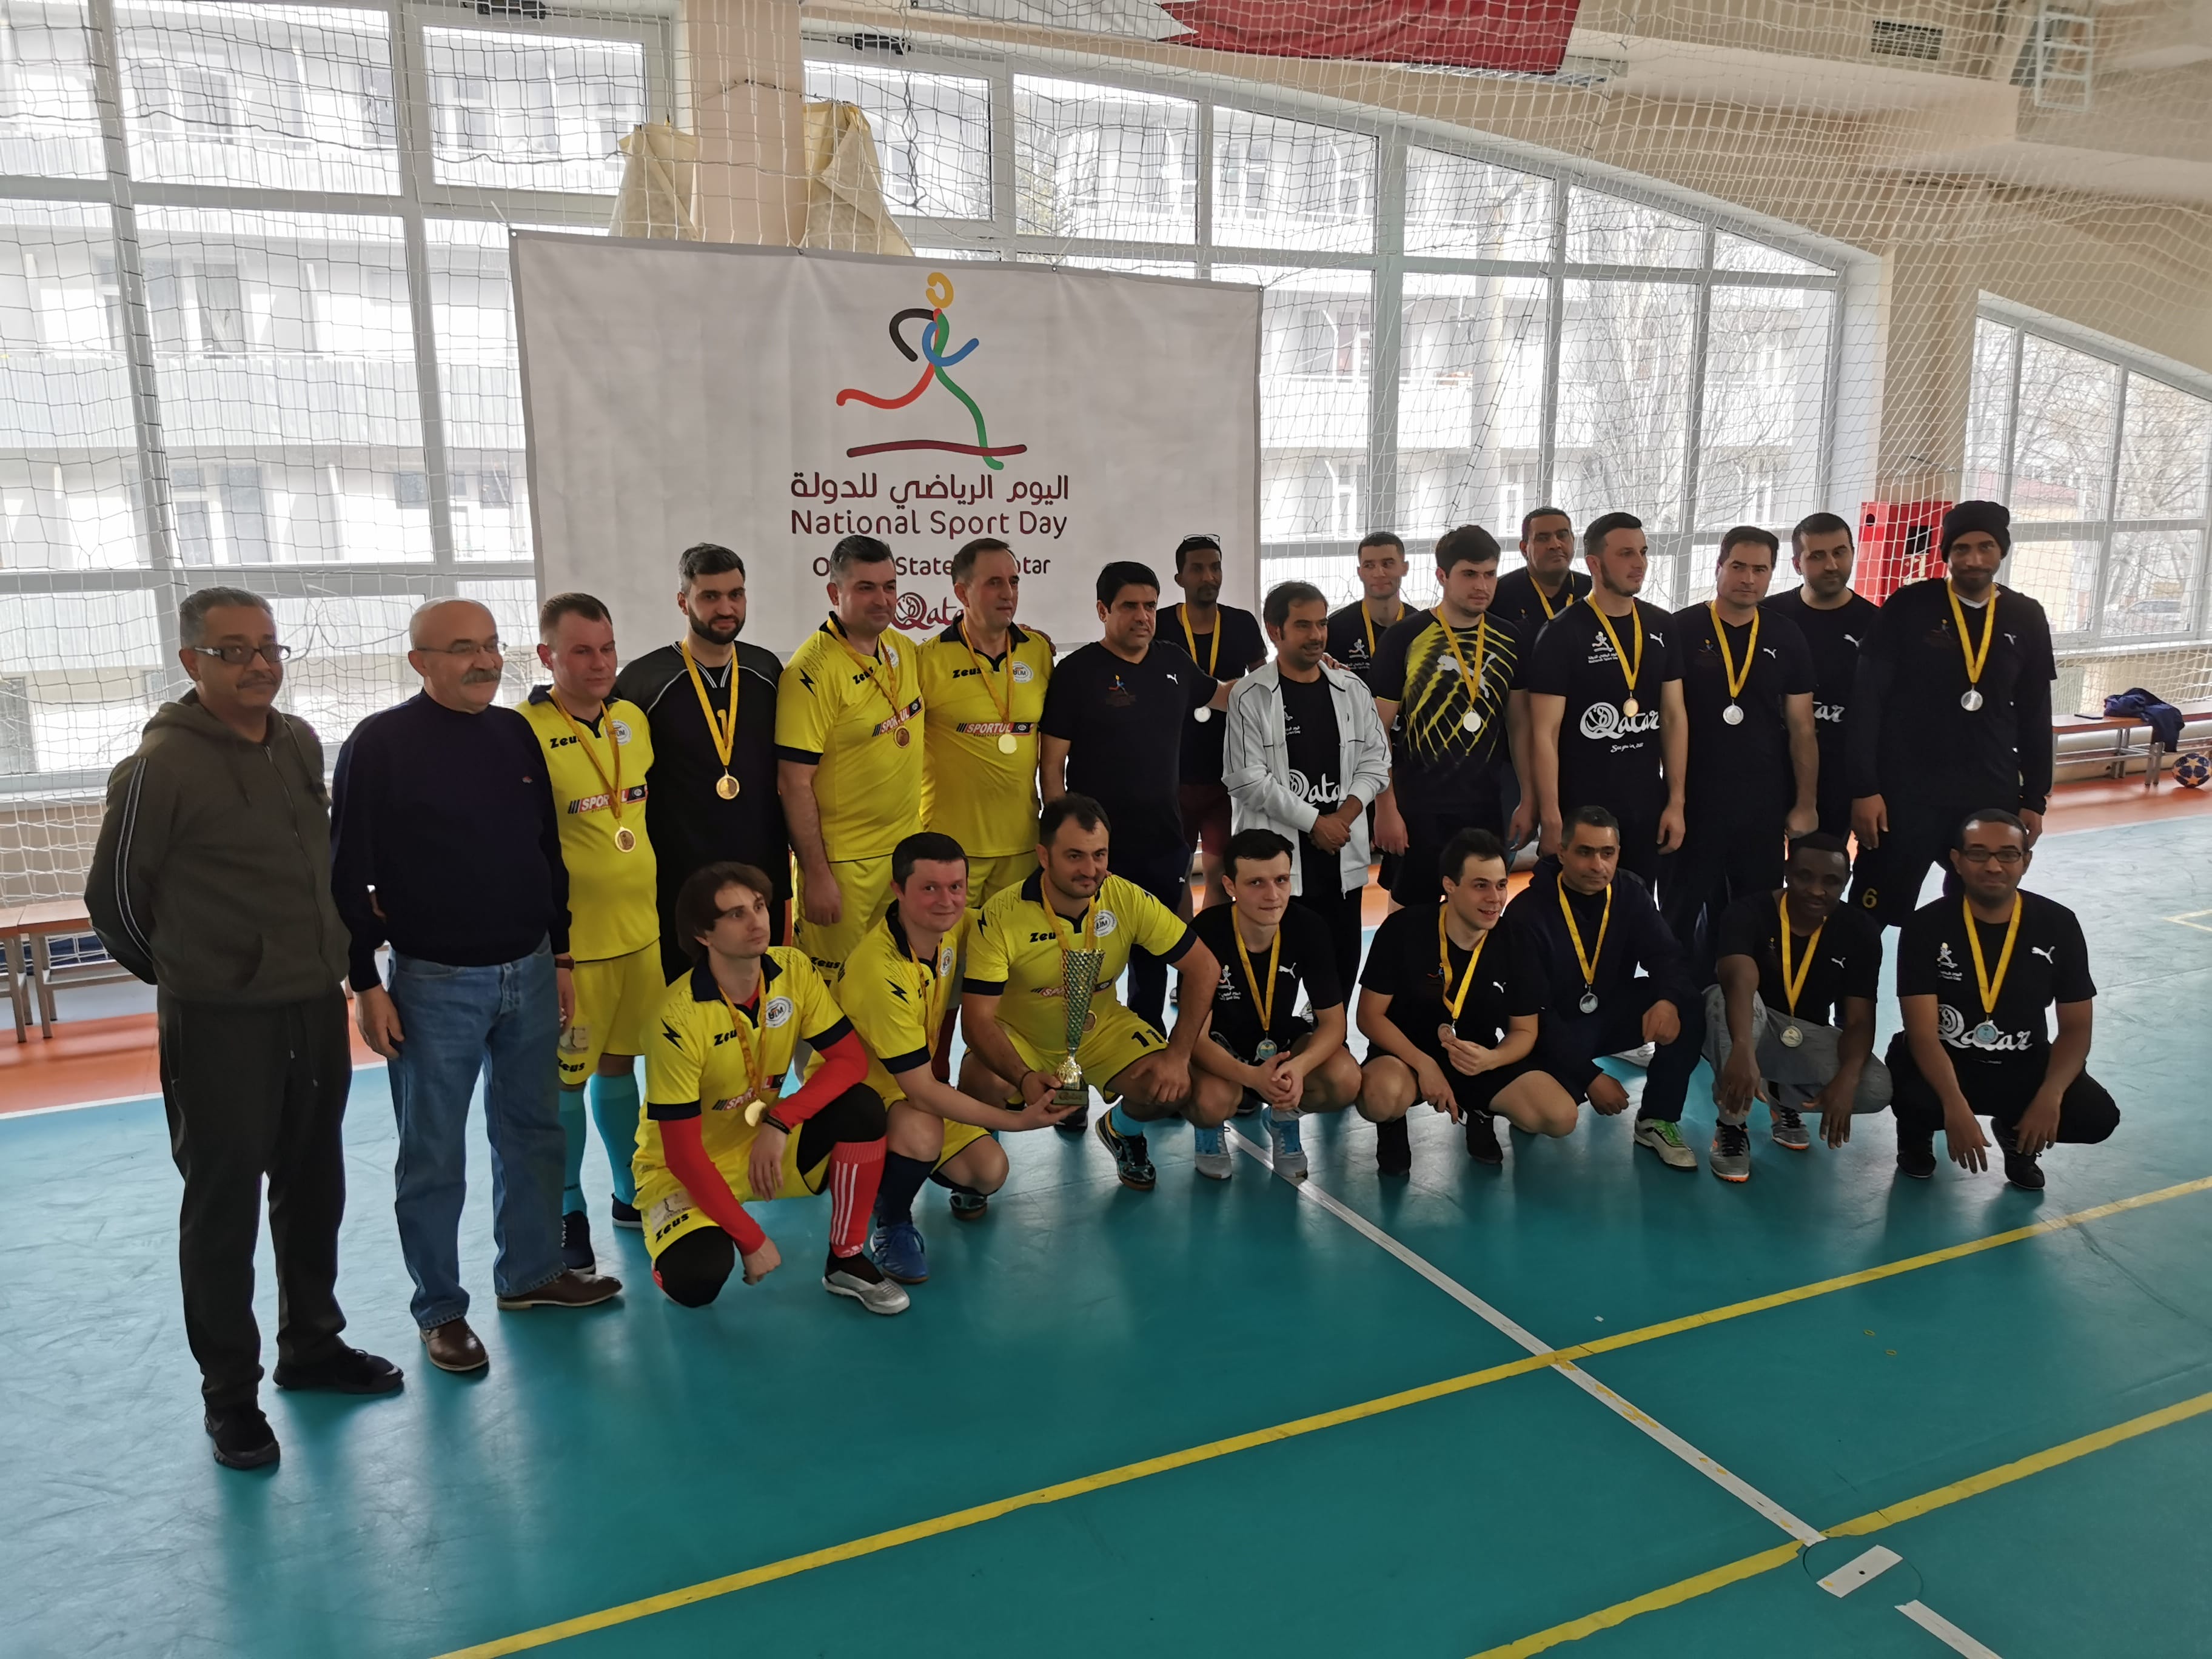 Prietenia a învins la meciul amical disputat între echipa ULIM și echipa Ambasadei Statului Qatar